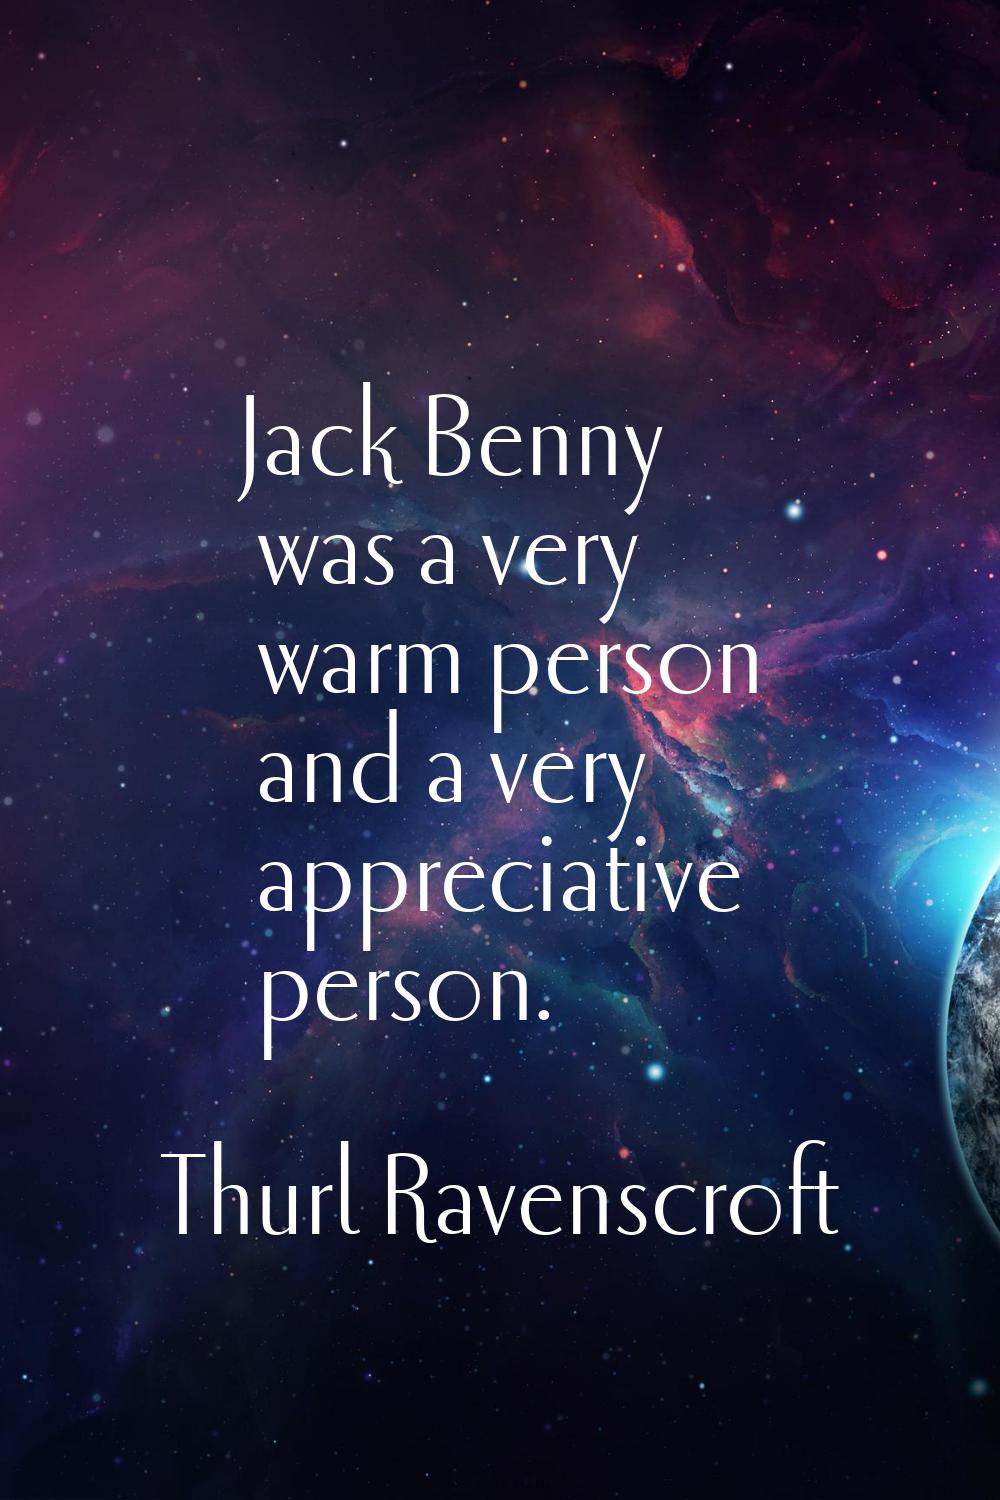 Jack Benny was a very warm person and a very appreciative person.